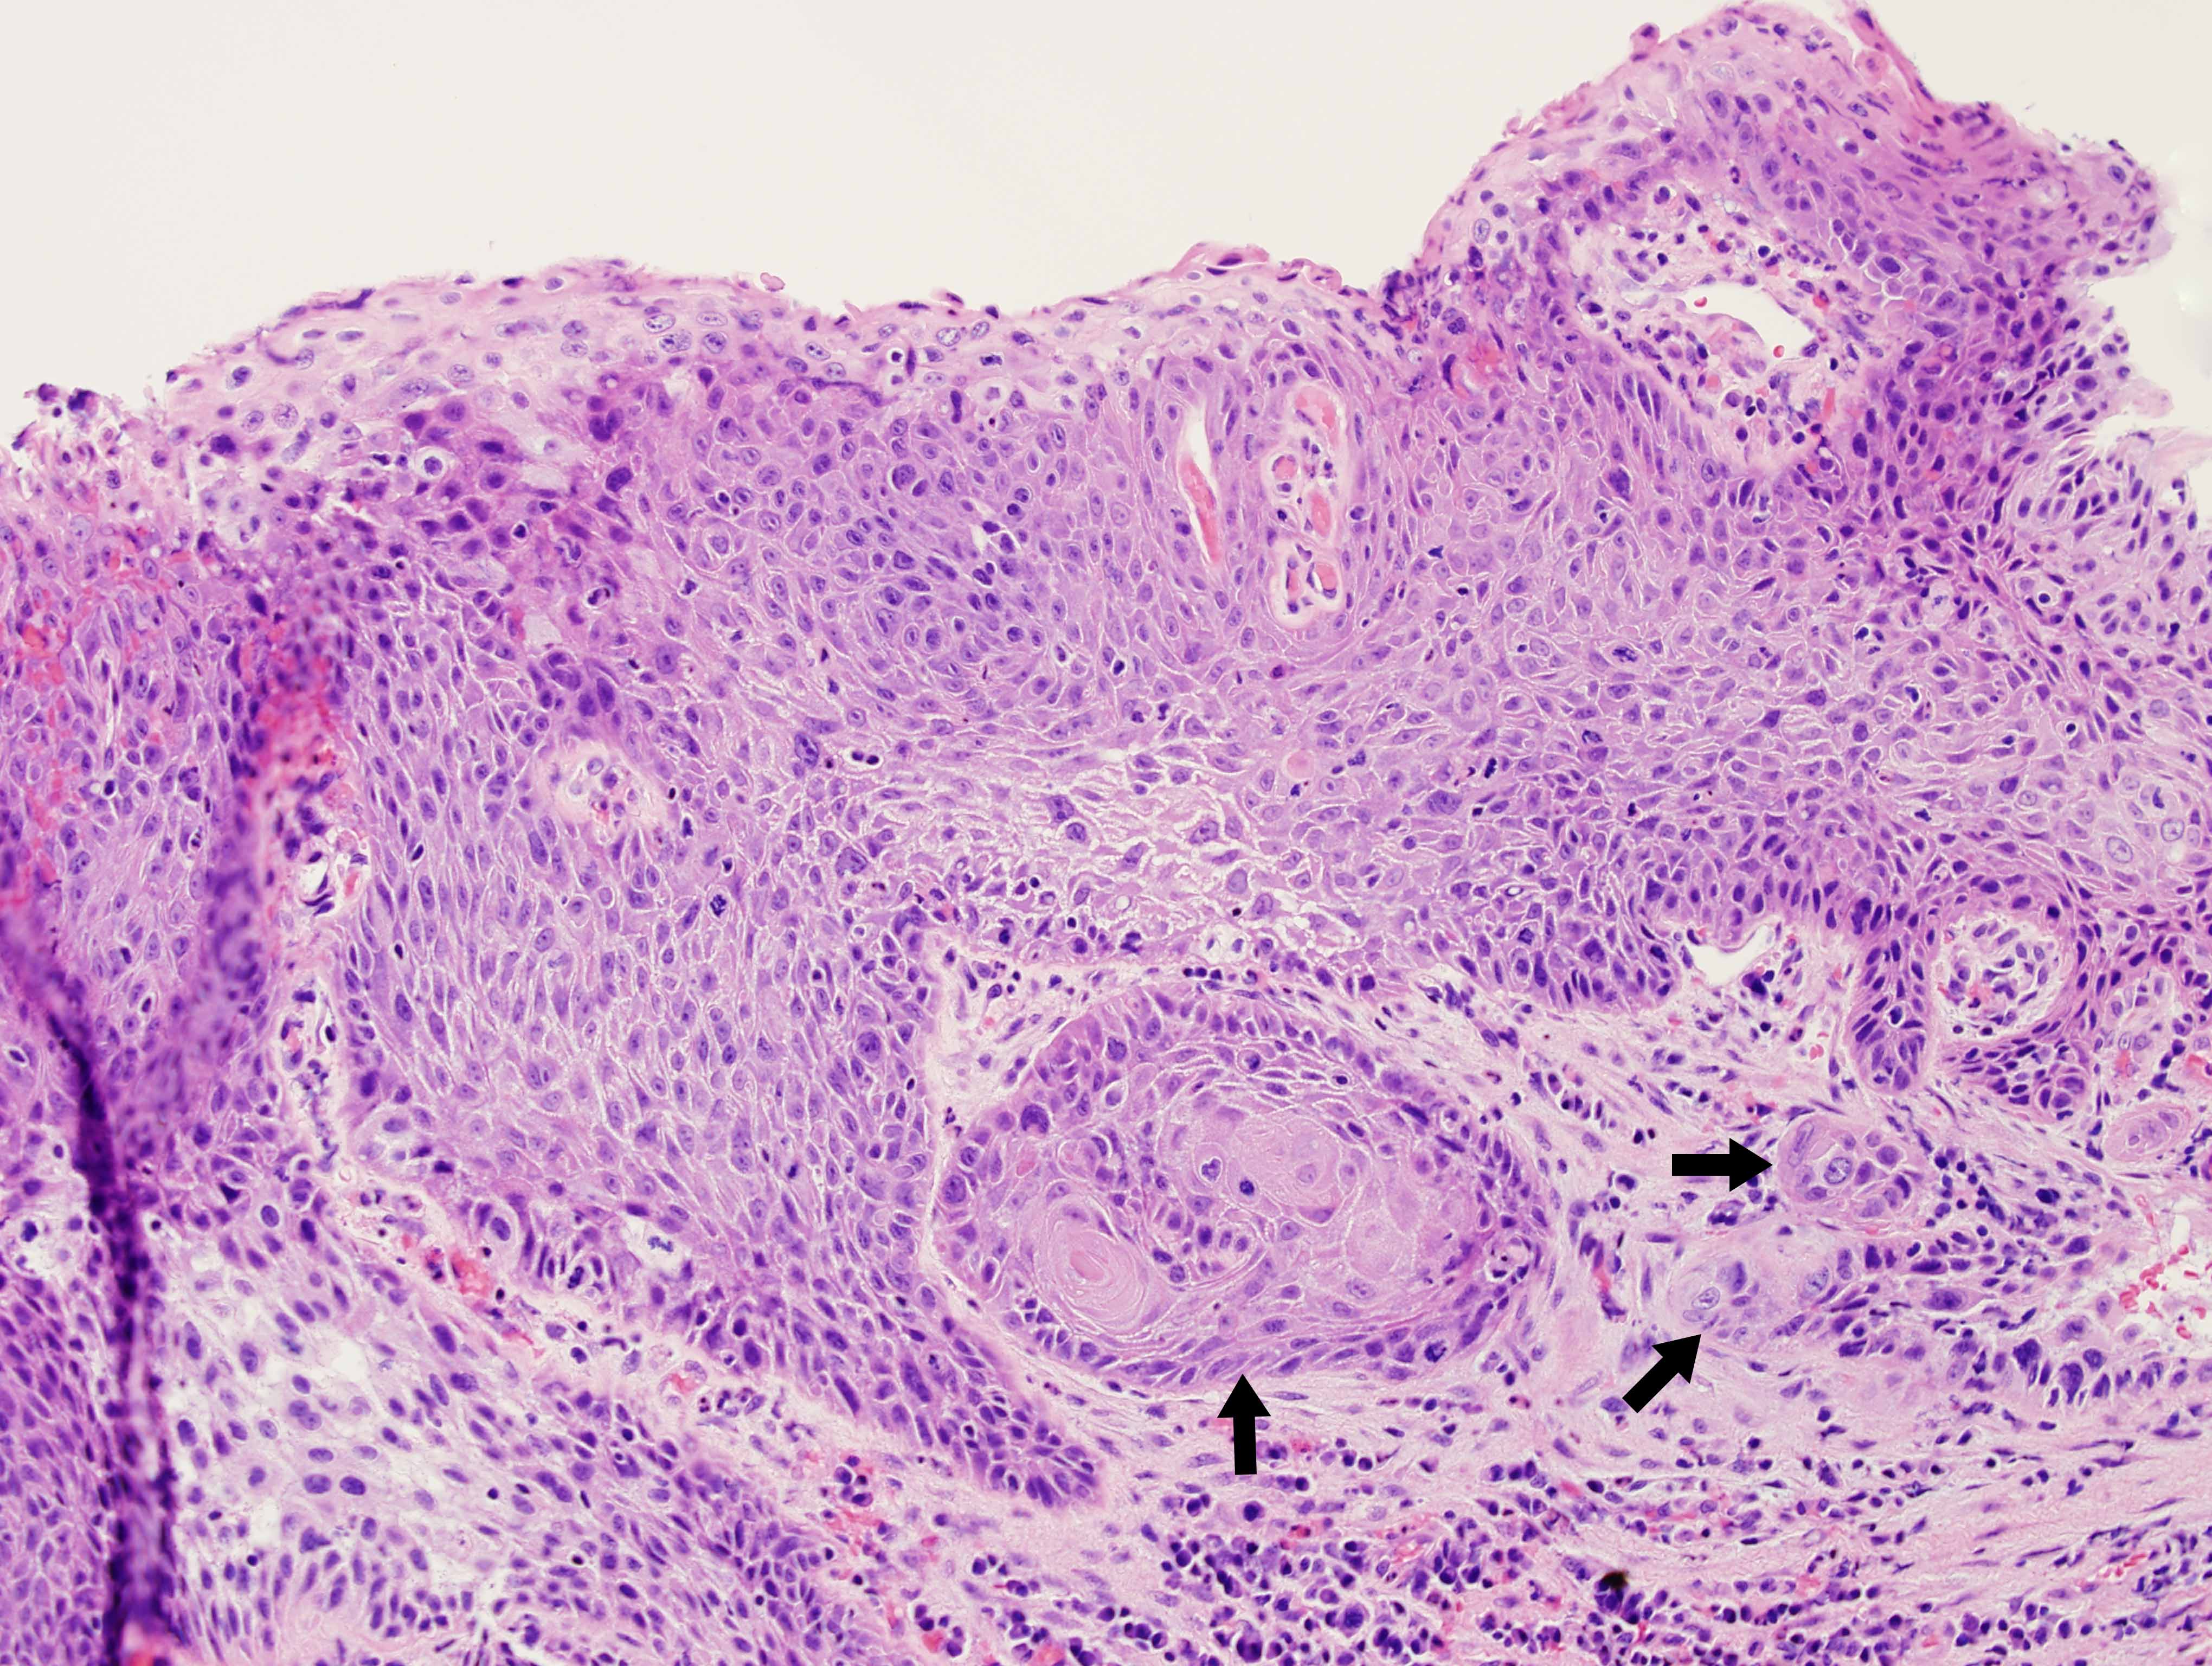 Invasive Squamous Cell Carcinoma Causing Laryngeal Leukoplakia Iowa